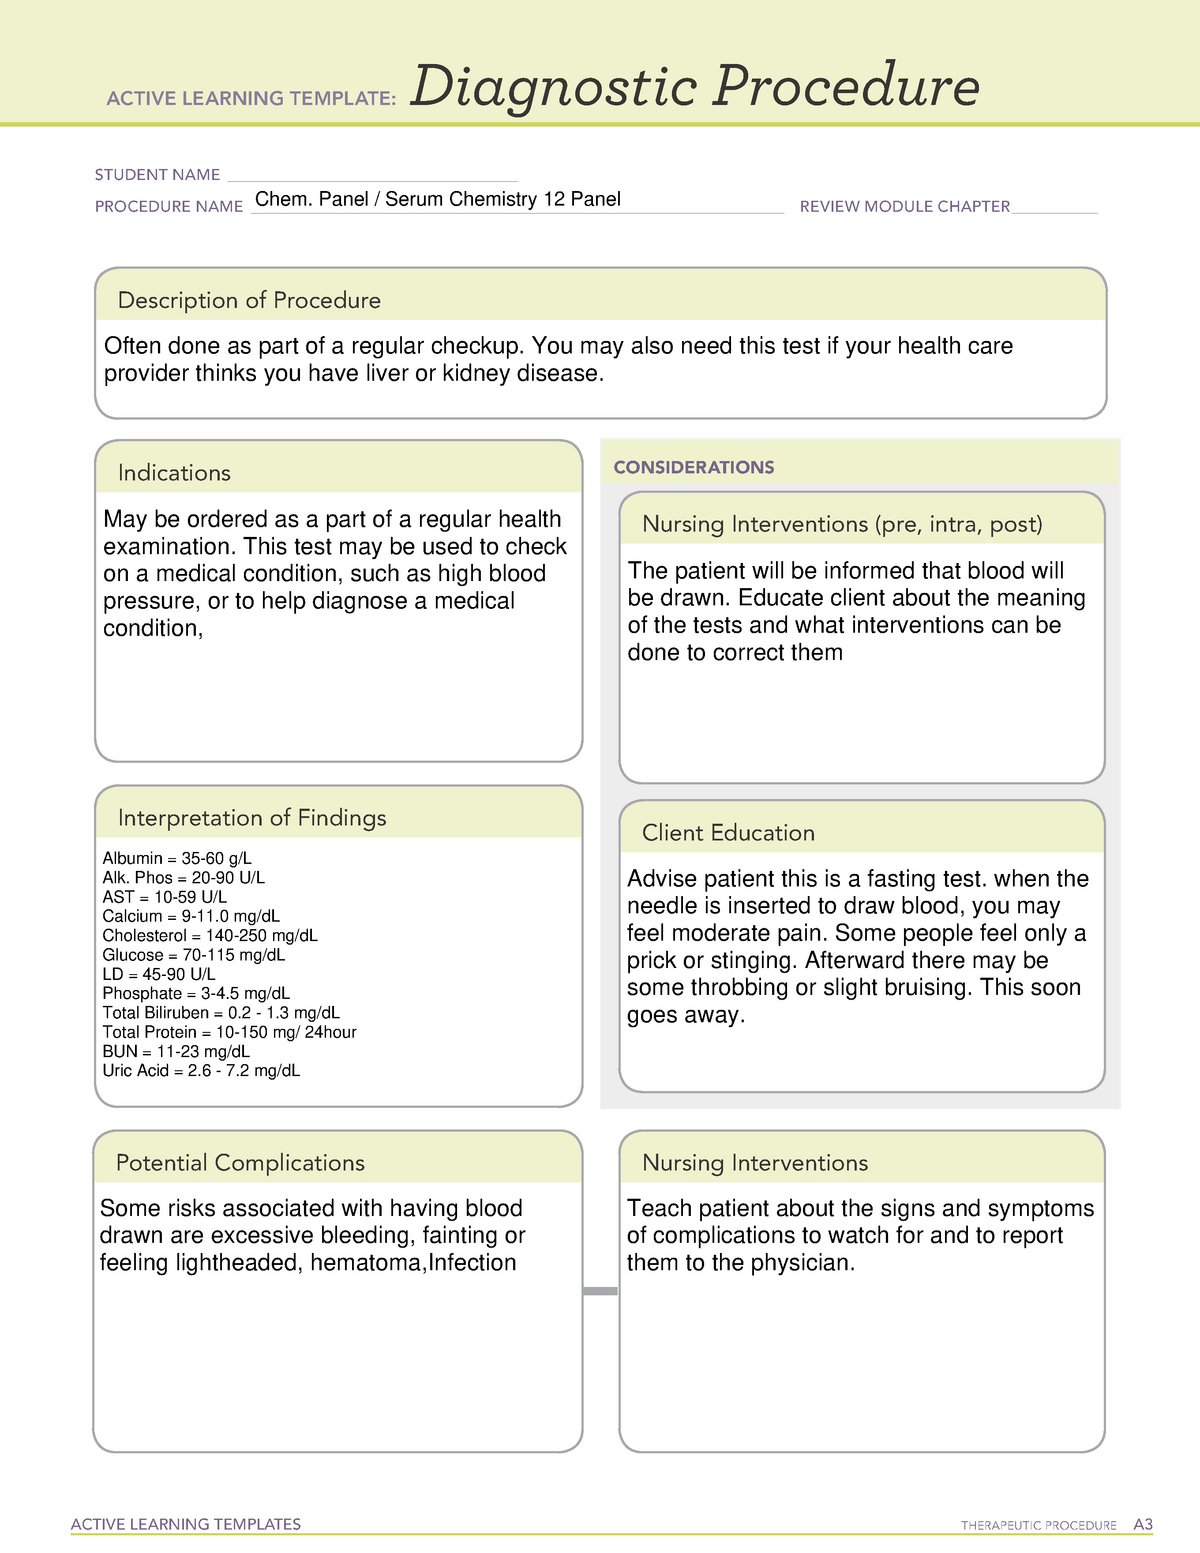 ati-chem-panel-diagnostic-procedure-sheet-active-learning-templates